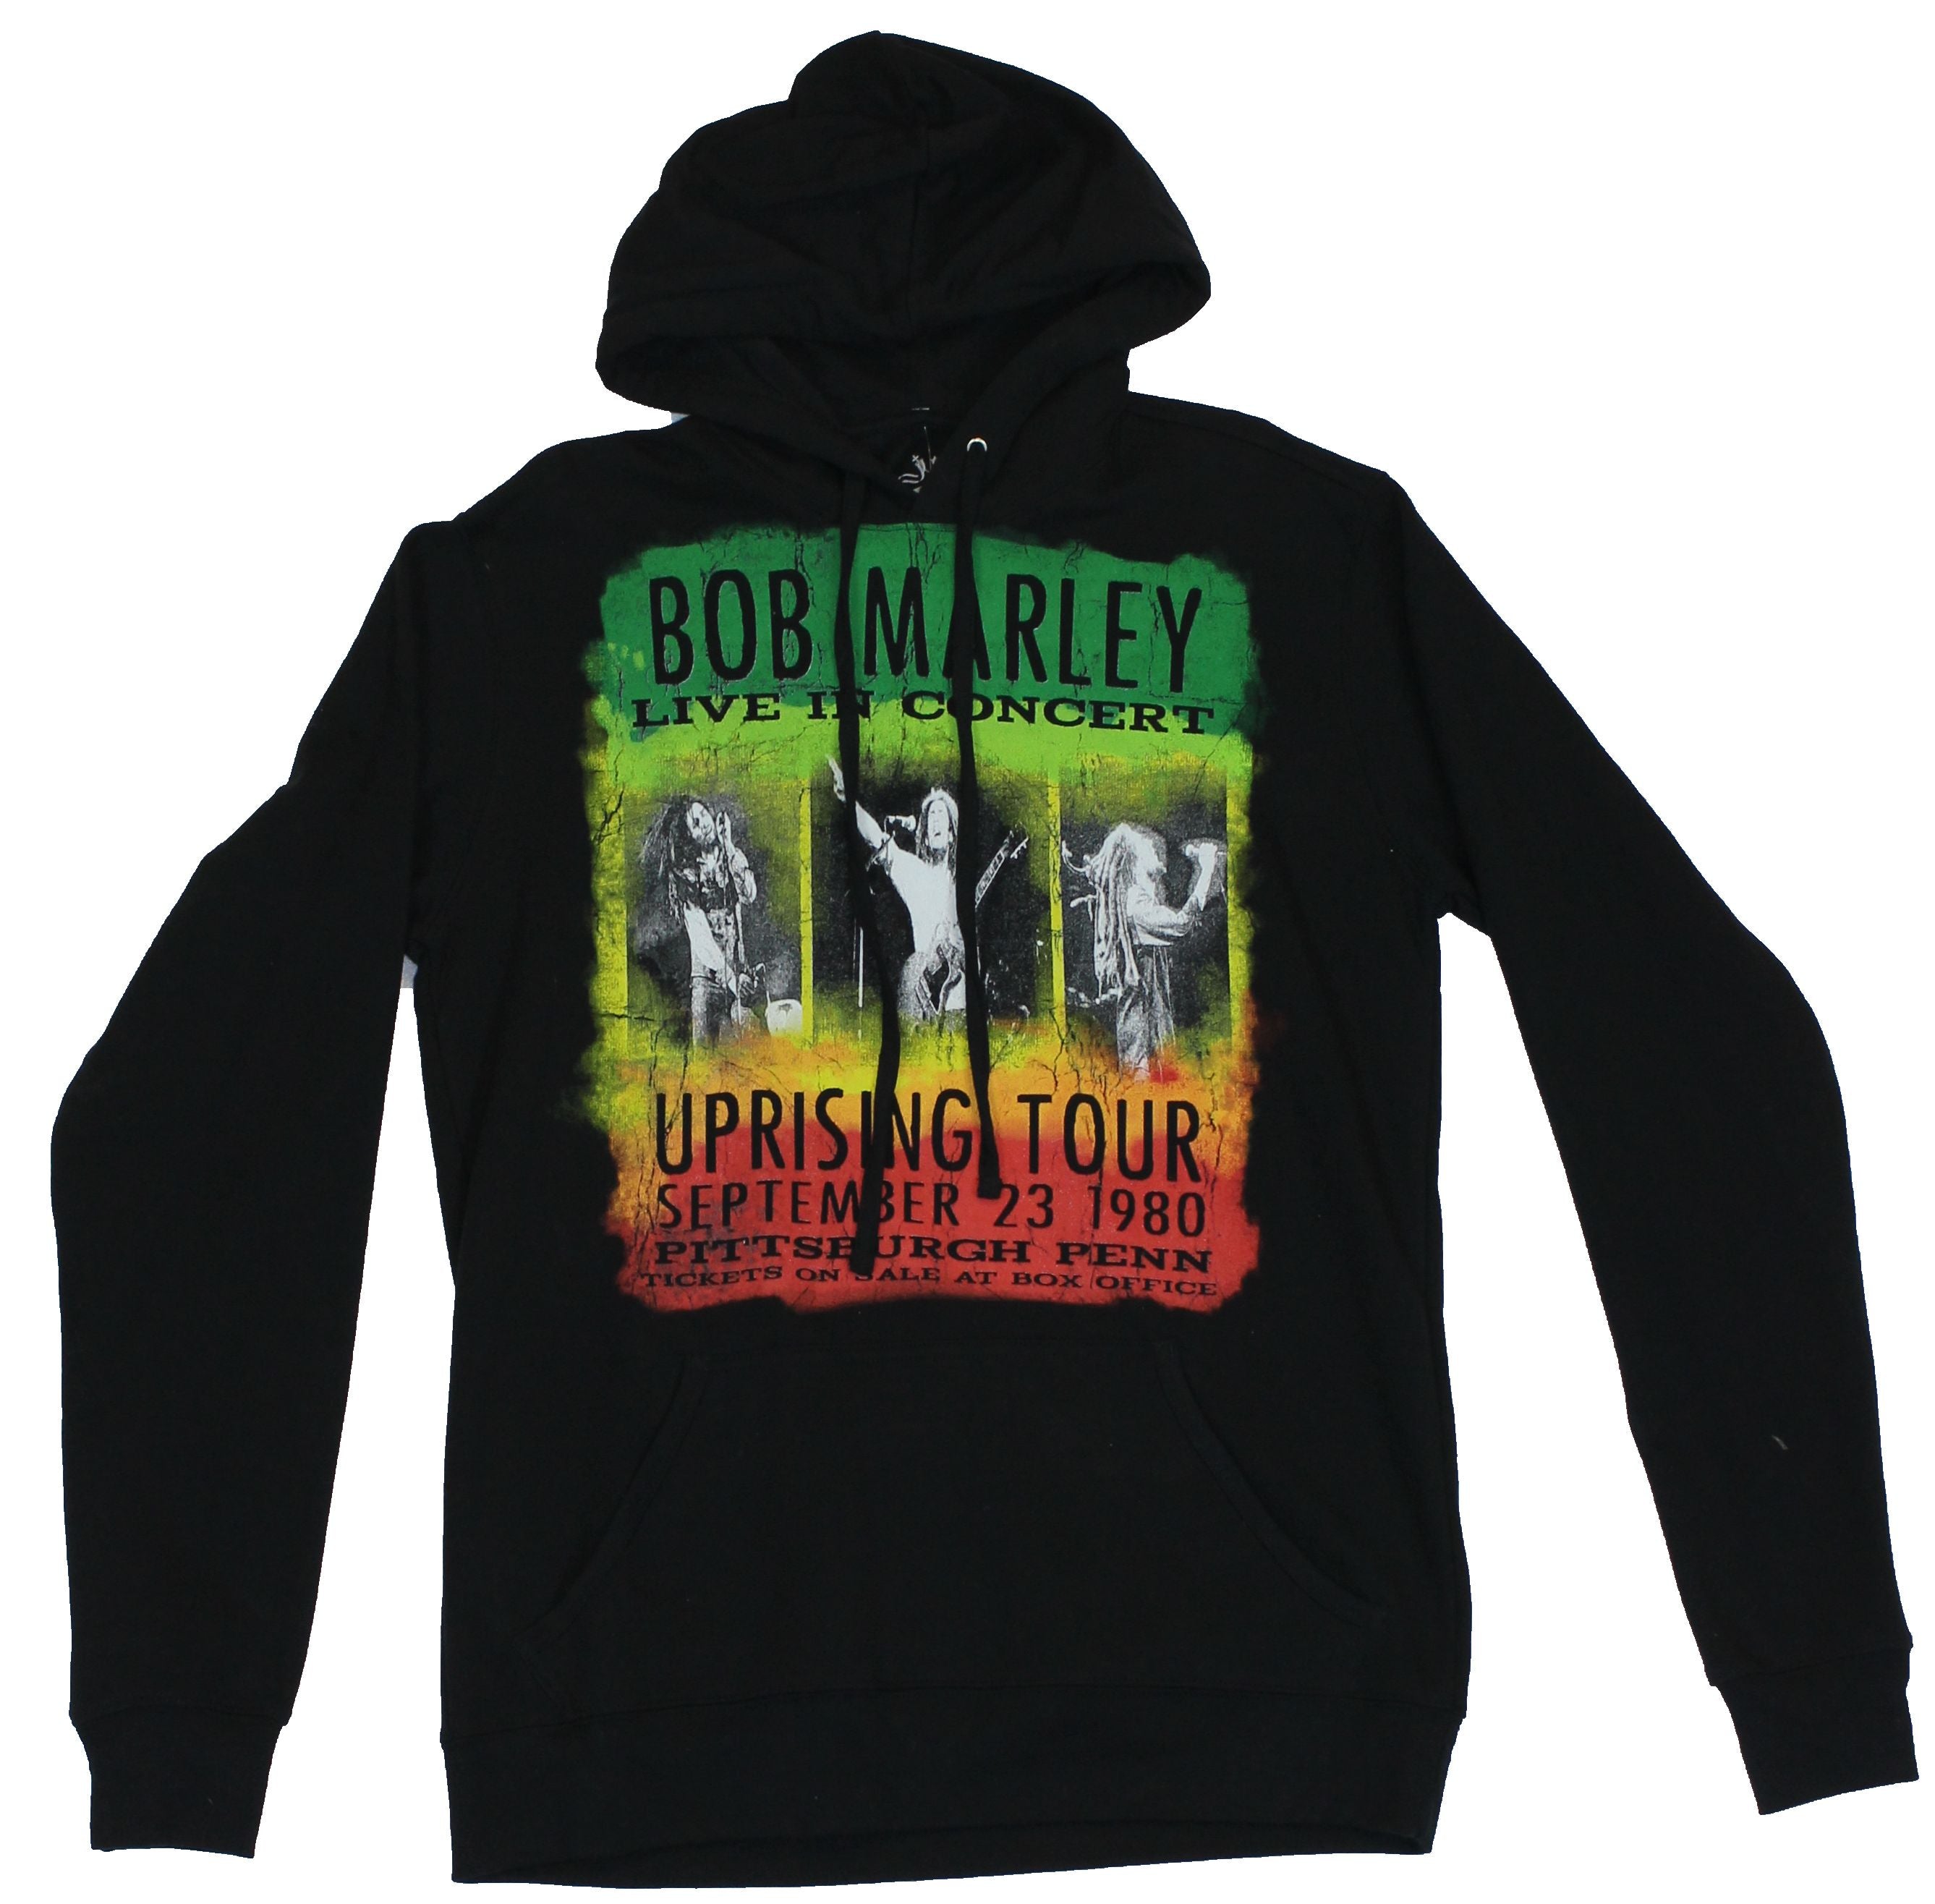 Bob Marley Pull Over  Hoodie Sweatshirt -  Uprising Tour 1980 Live in Concert